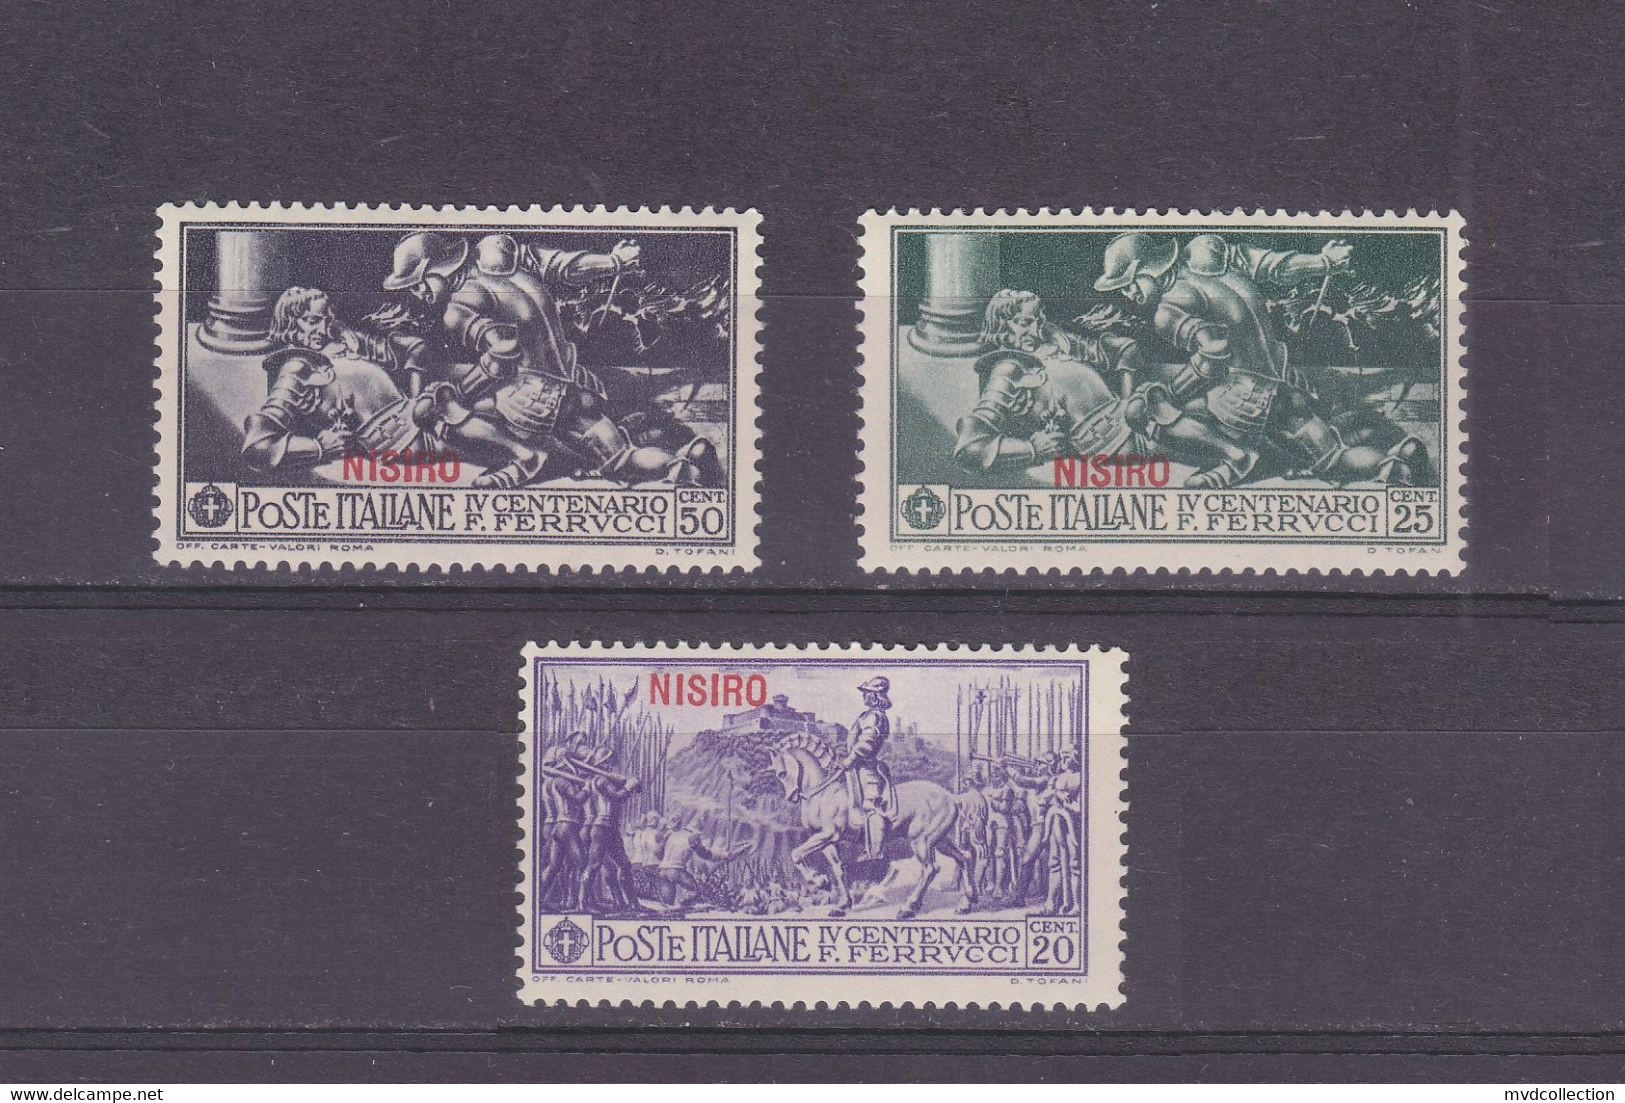 ITALY Lot CENTENARIO FERRUCCI Stamps Overprinted NISIRO 1930 VF MH Original Gum - Ägäis (Nisiro)